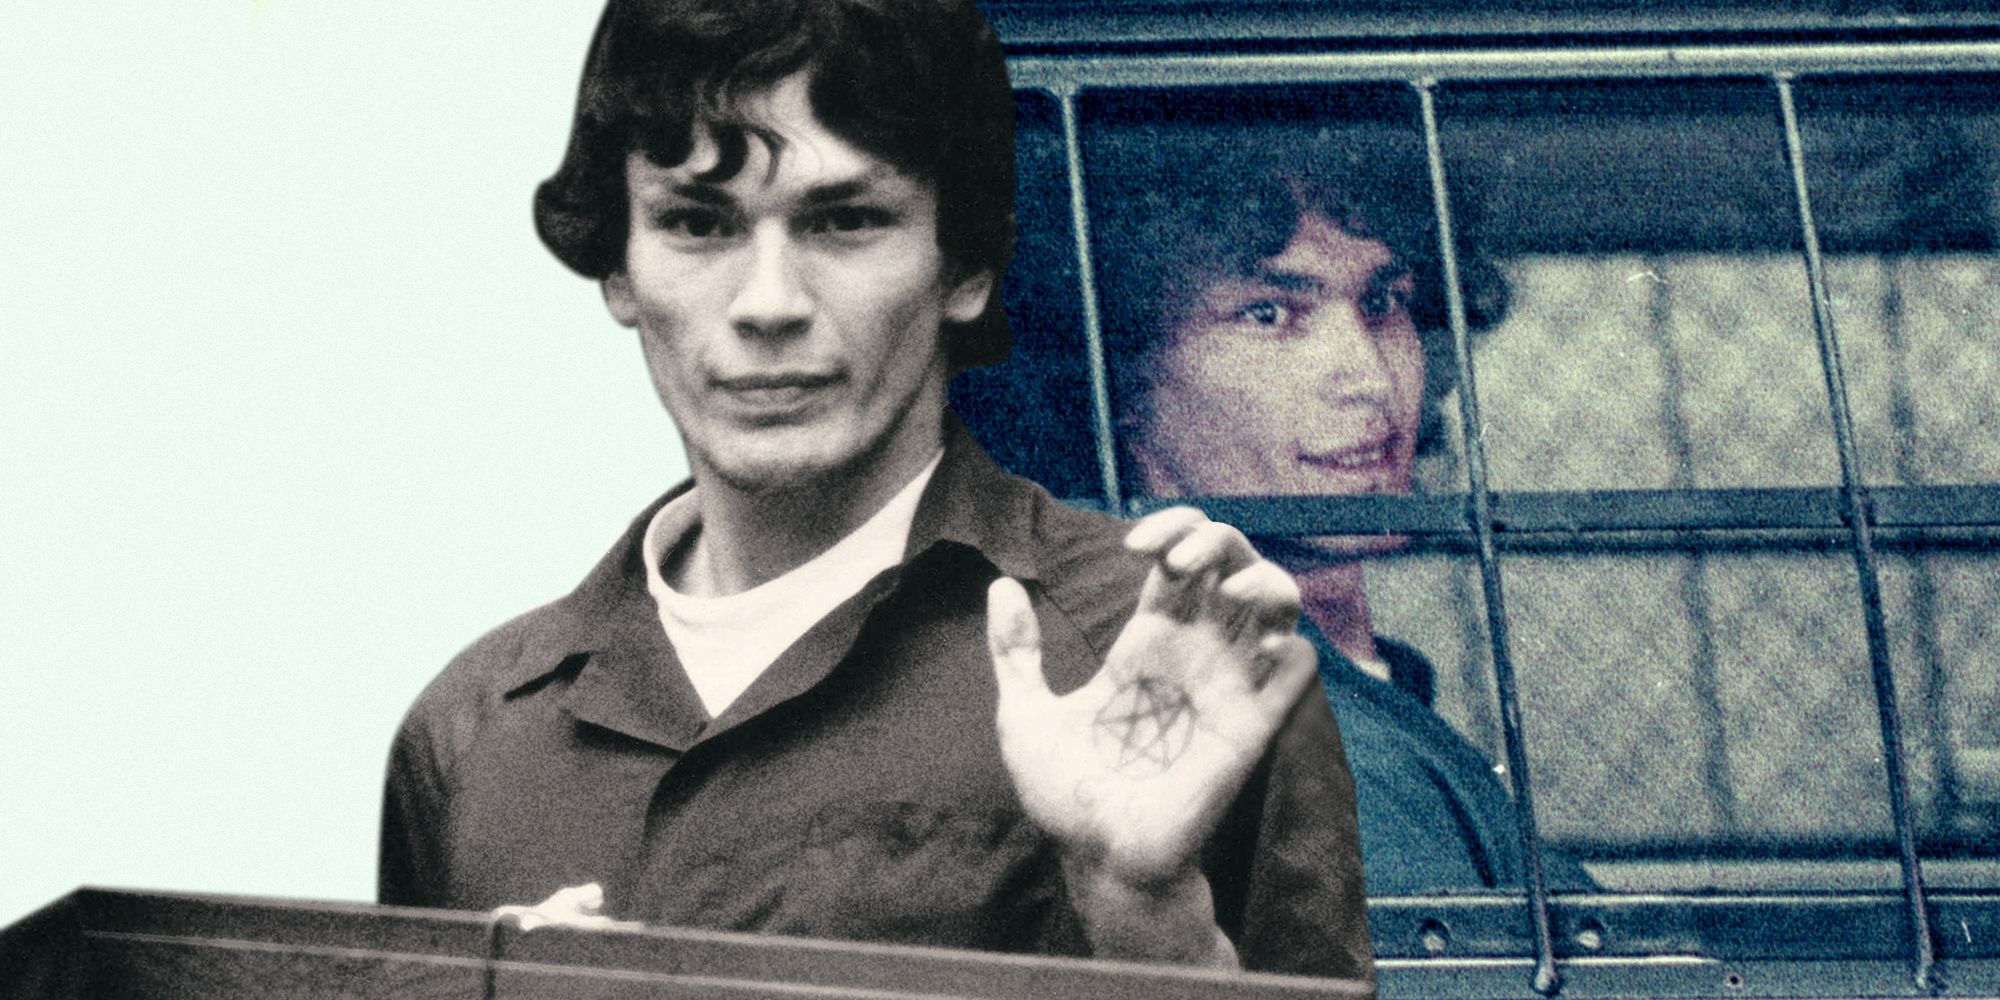 On this day in 1984: Richard Ramirez begins 'Night Stalker' killing spree  in Southern California